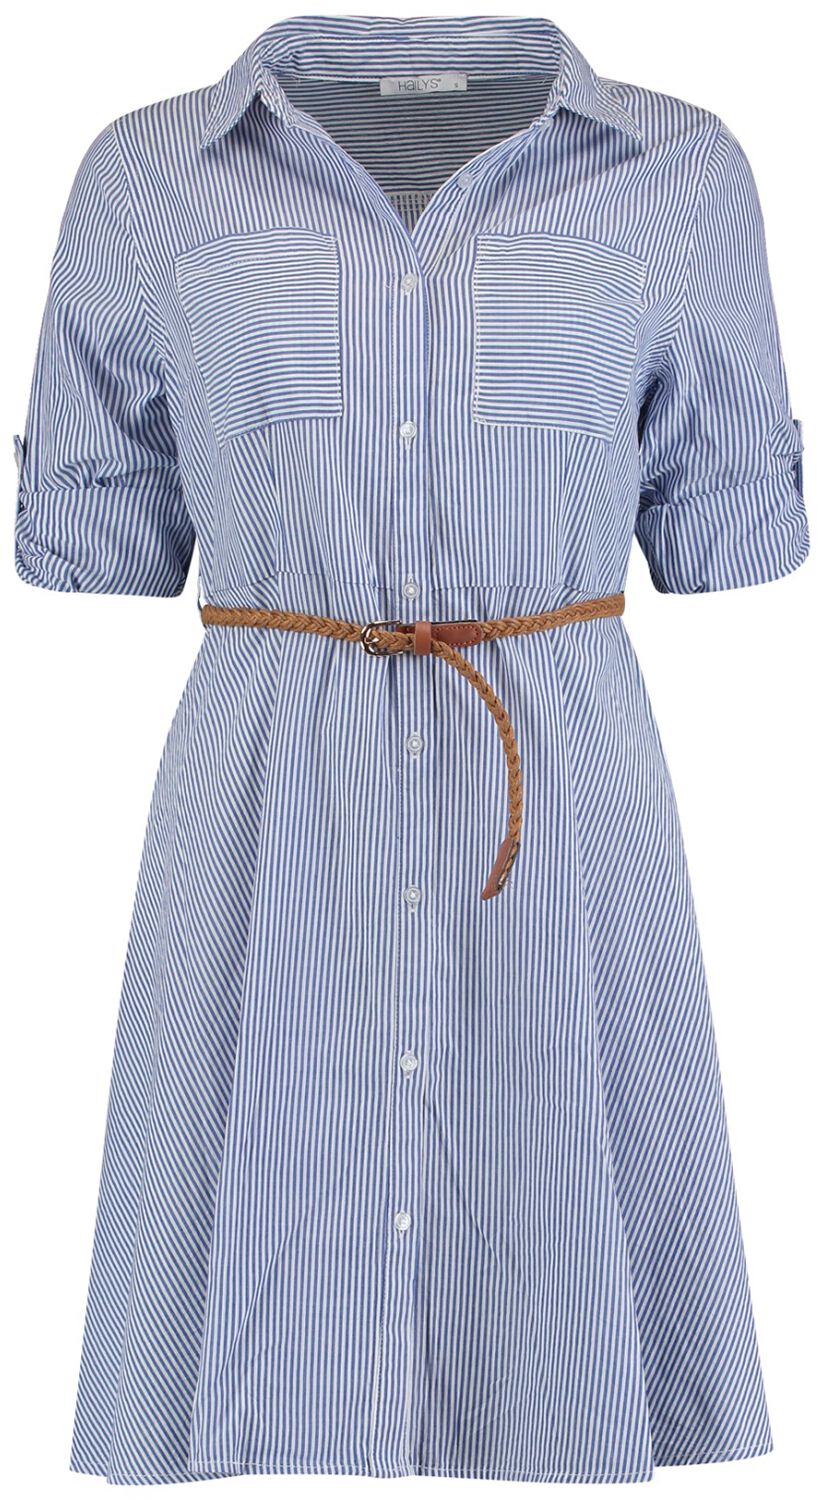 Hailys Clea Kurzes Kleid blau weiß in XL